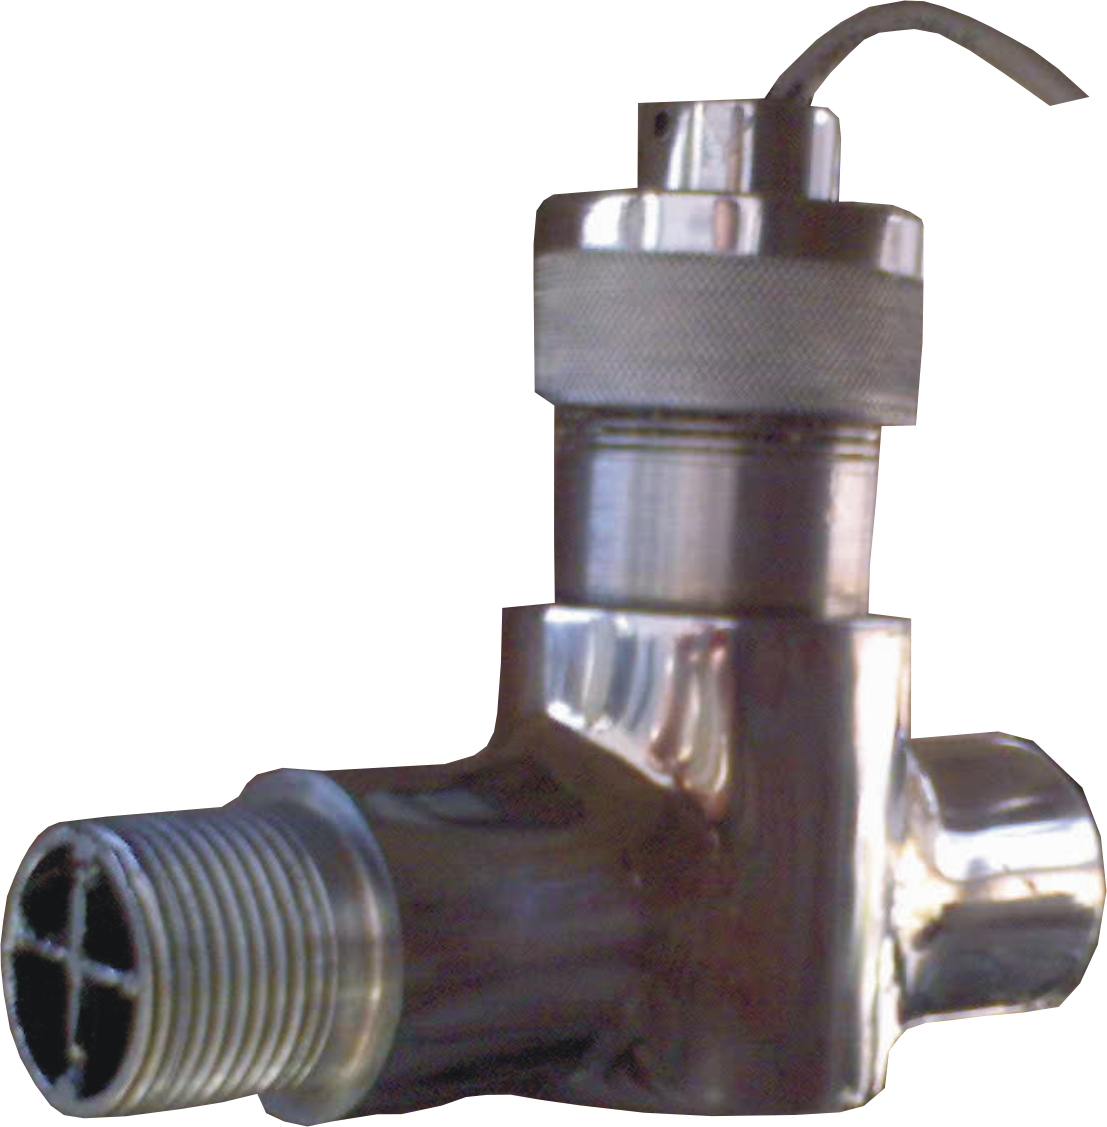   						                       Socket Wrench Torque Sensor 											                      